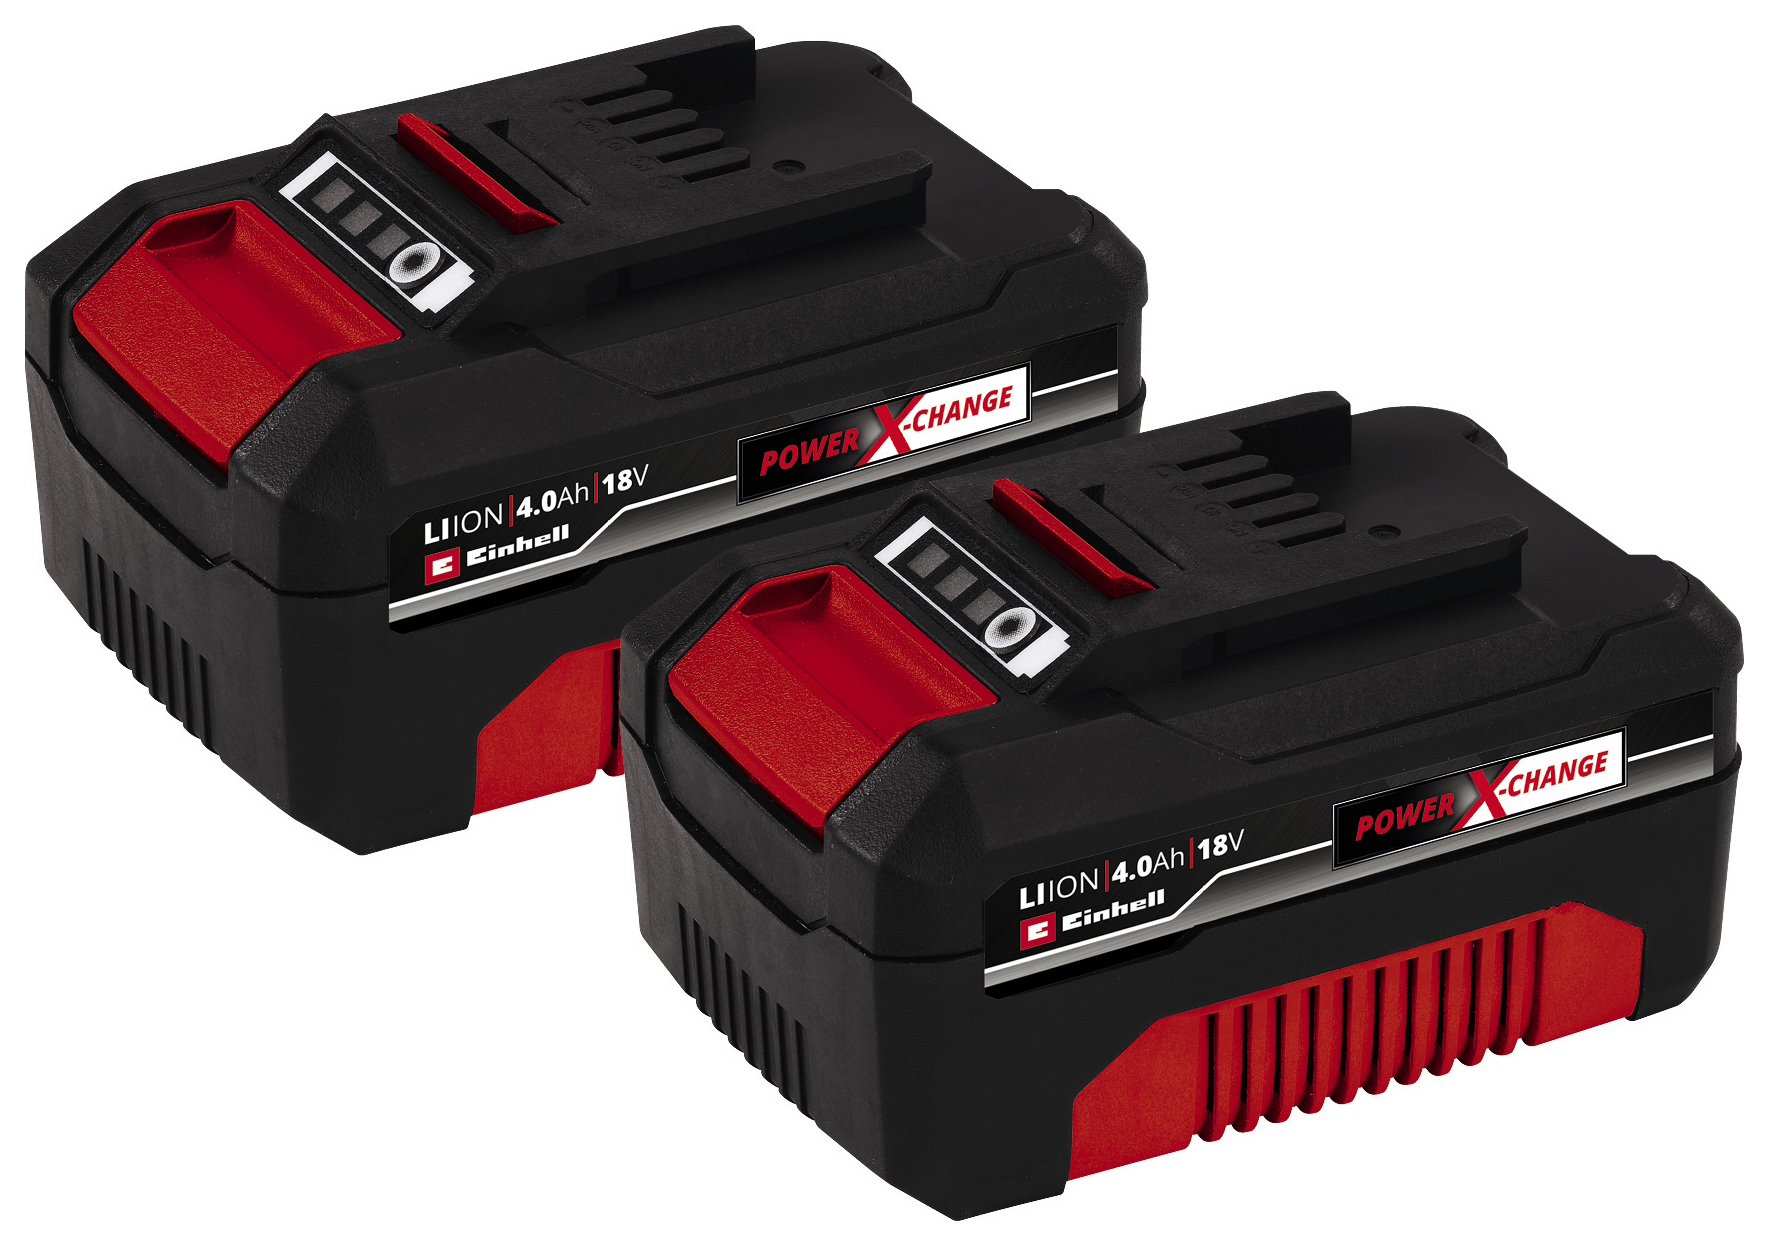 Einhell Power X-Change 18V 2 x 4.0Ah Li-ion Twin Pack Battery